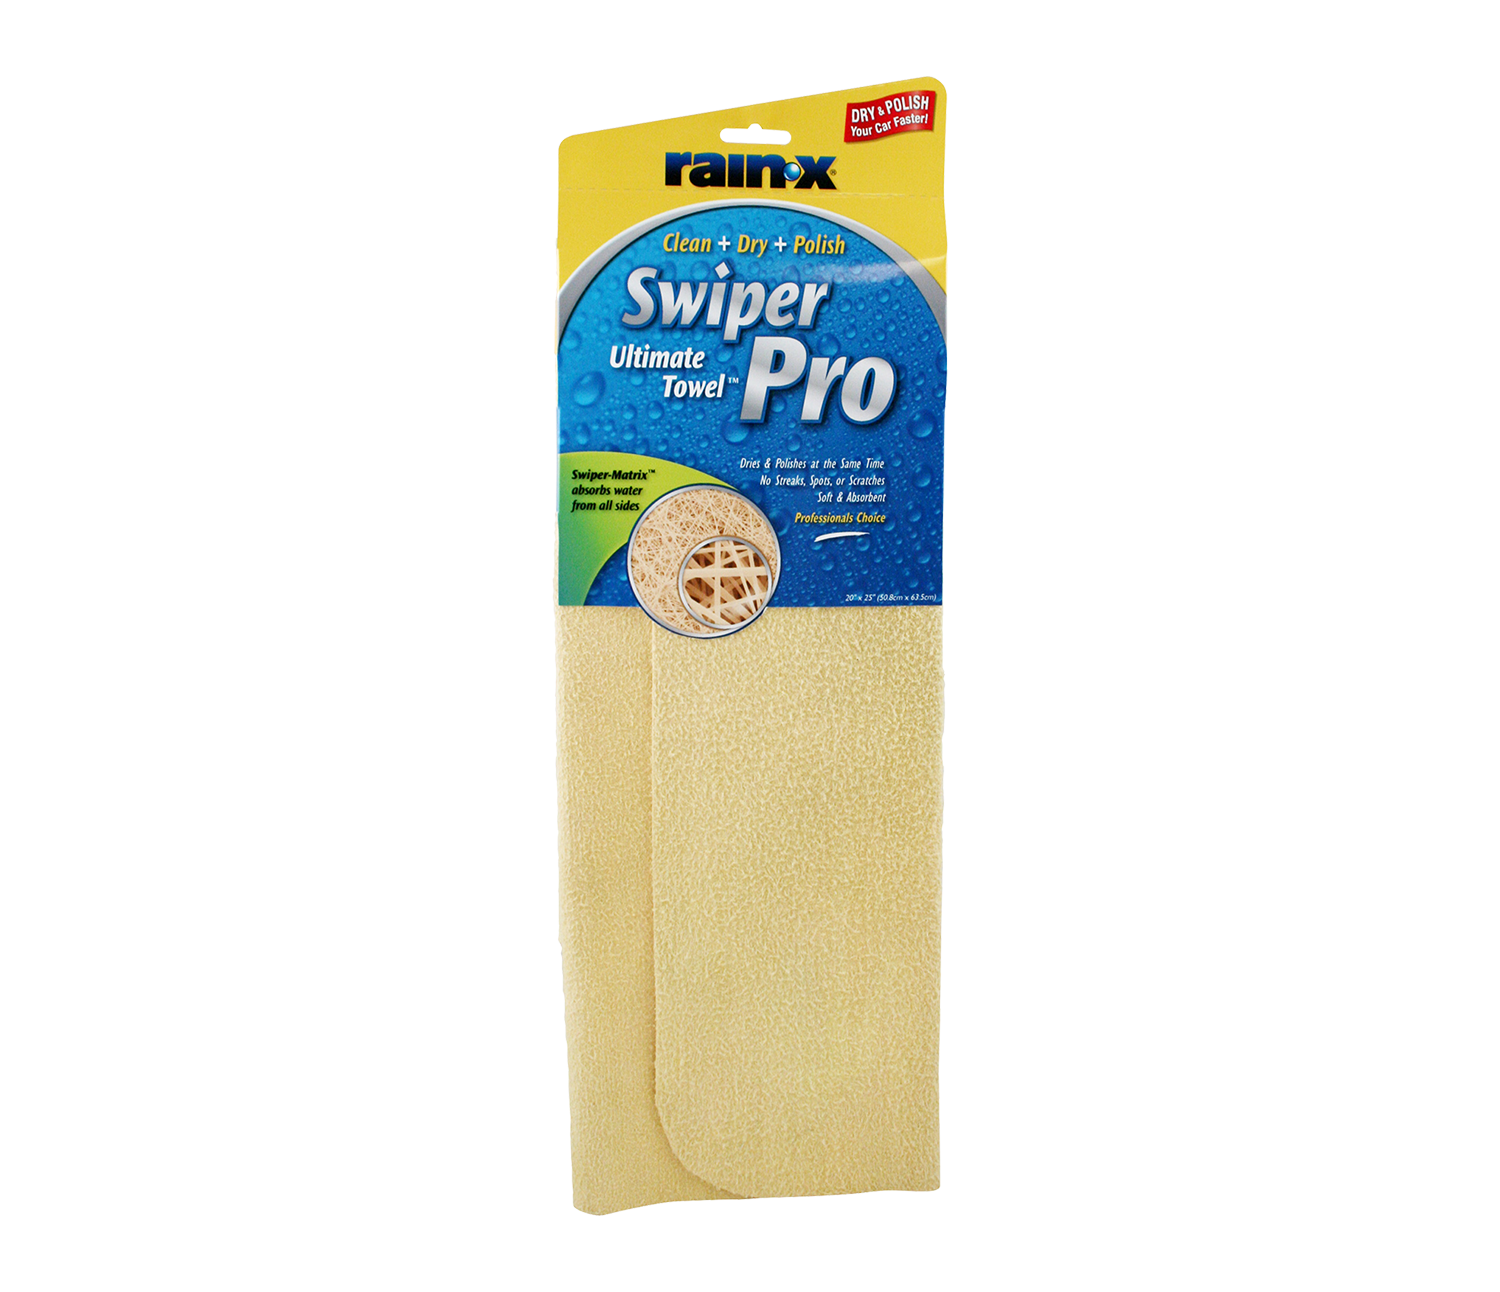 Rain-X Swiper Pro Ultimate Towel